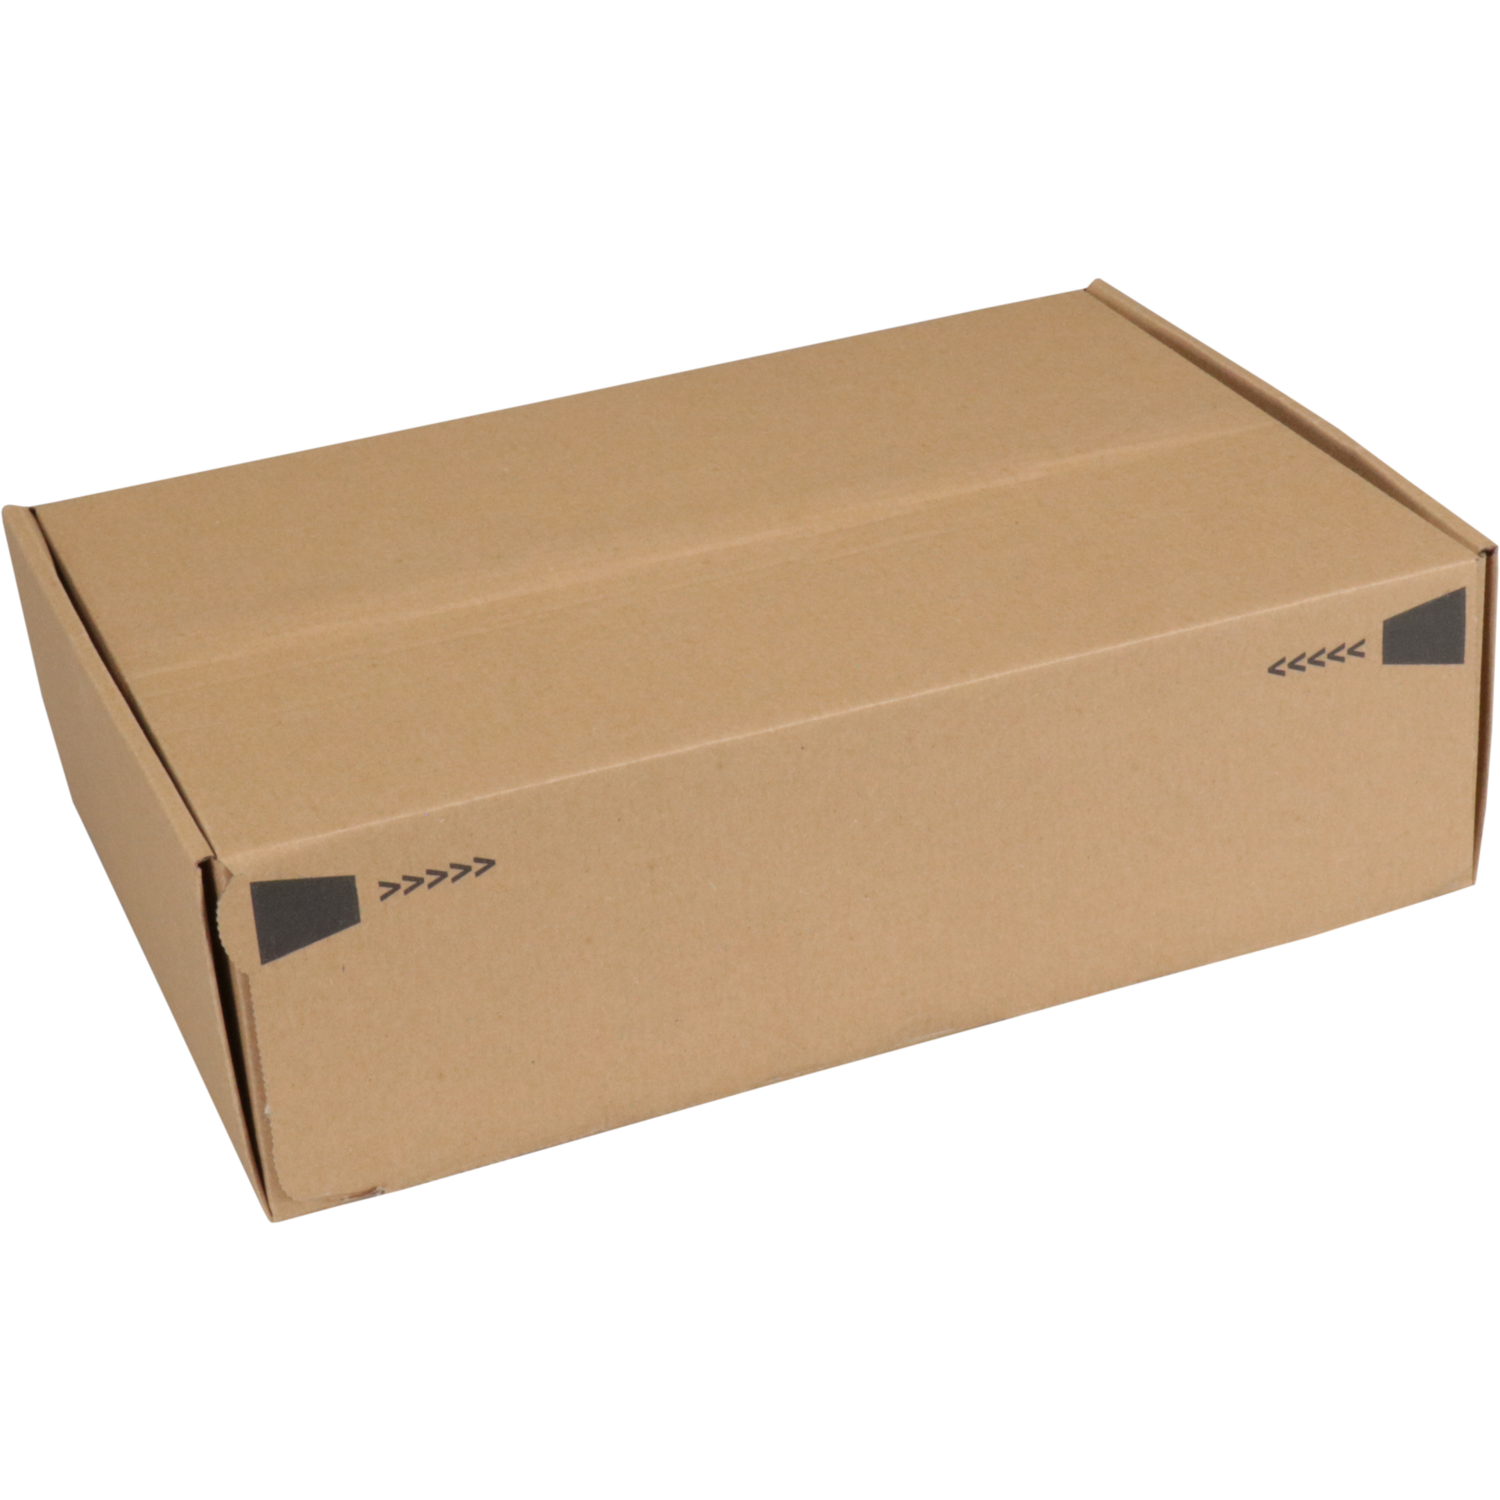 SendProof® Colis postal, carton ondulé, 305x210x91mm, brun 1